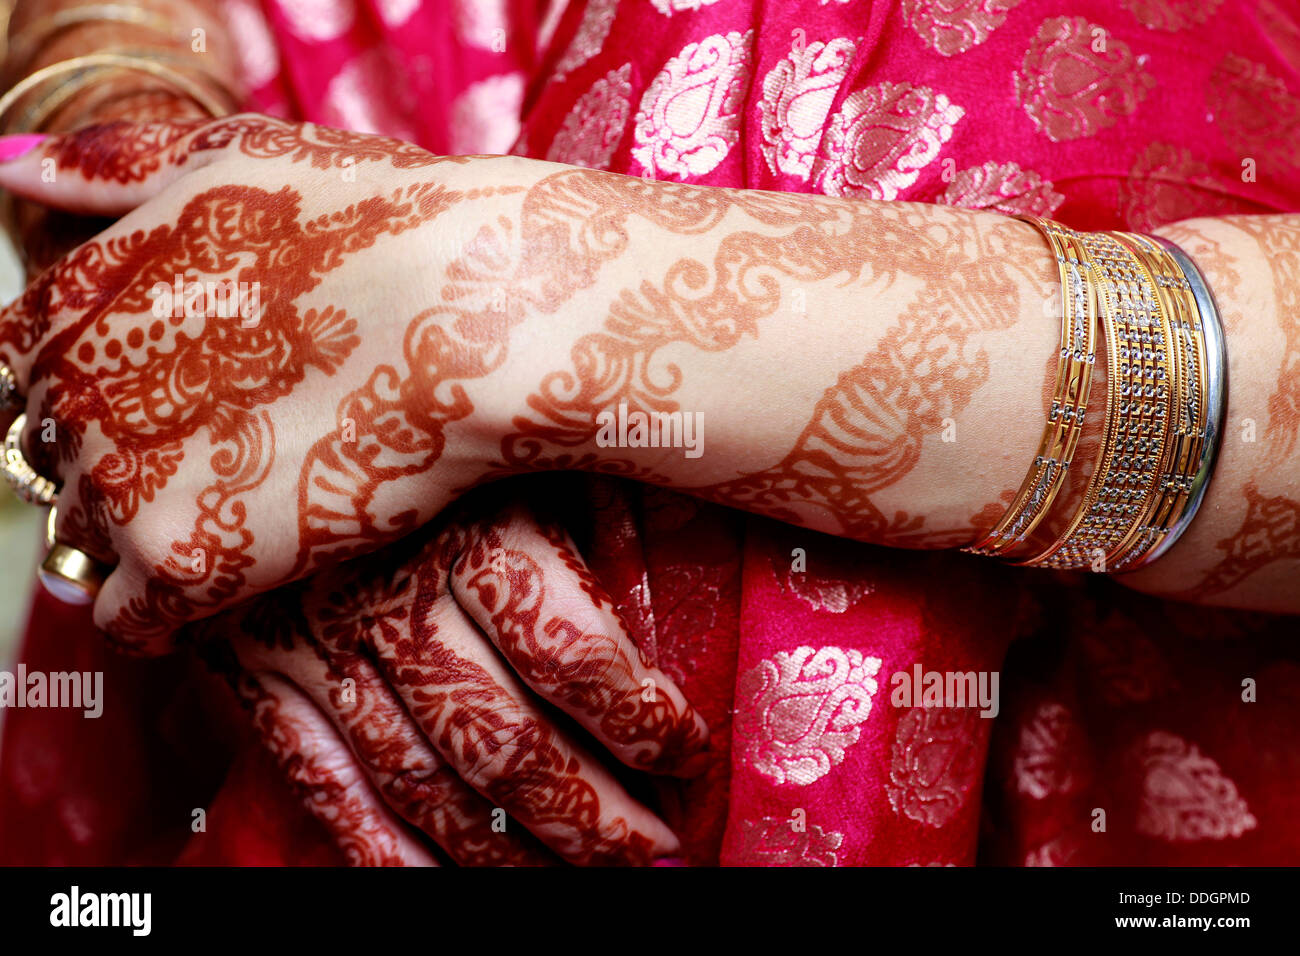 Sposa indiano con Henna Tattoo Foto Stock